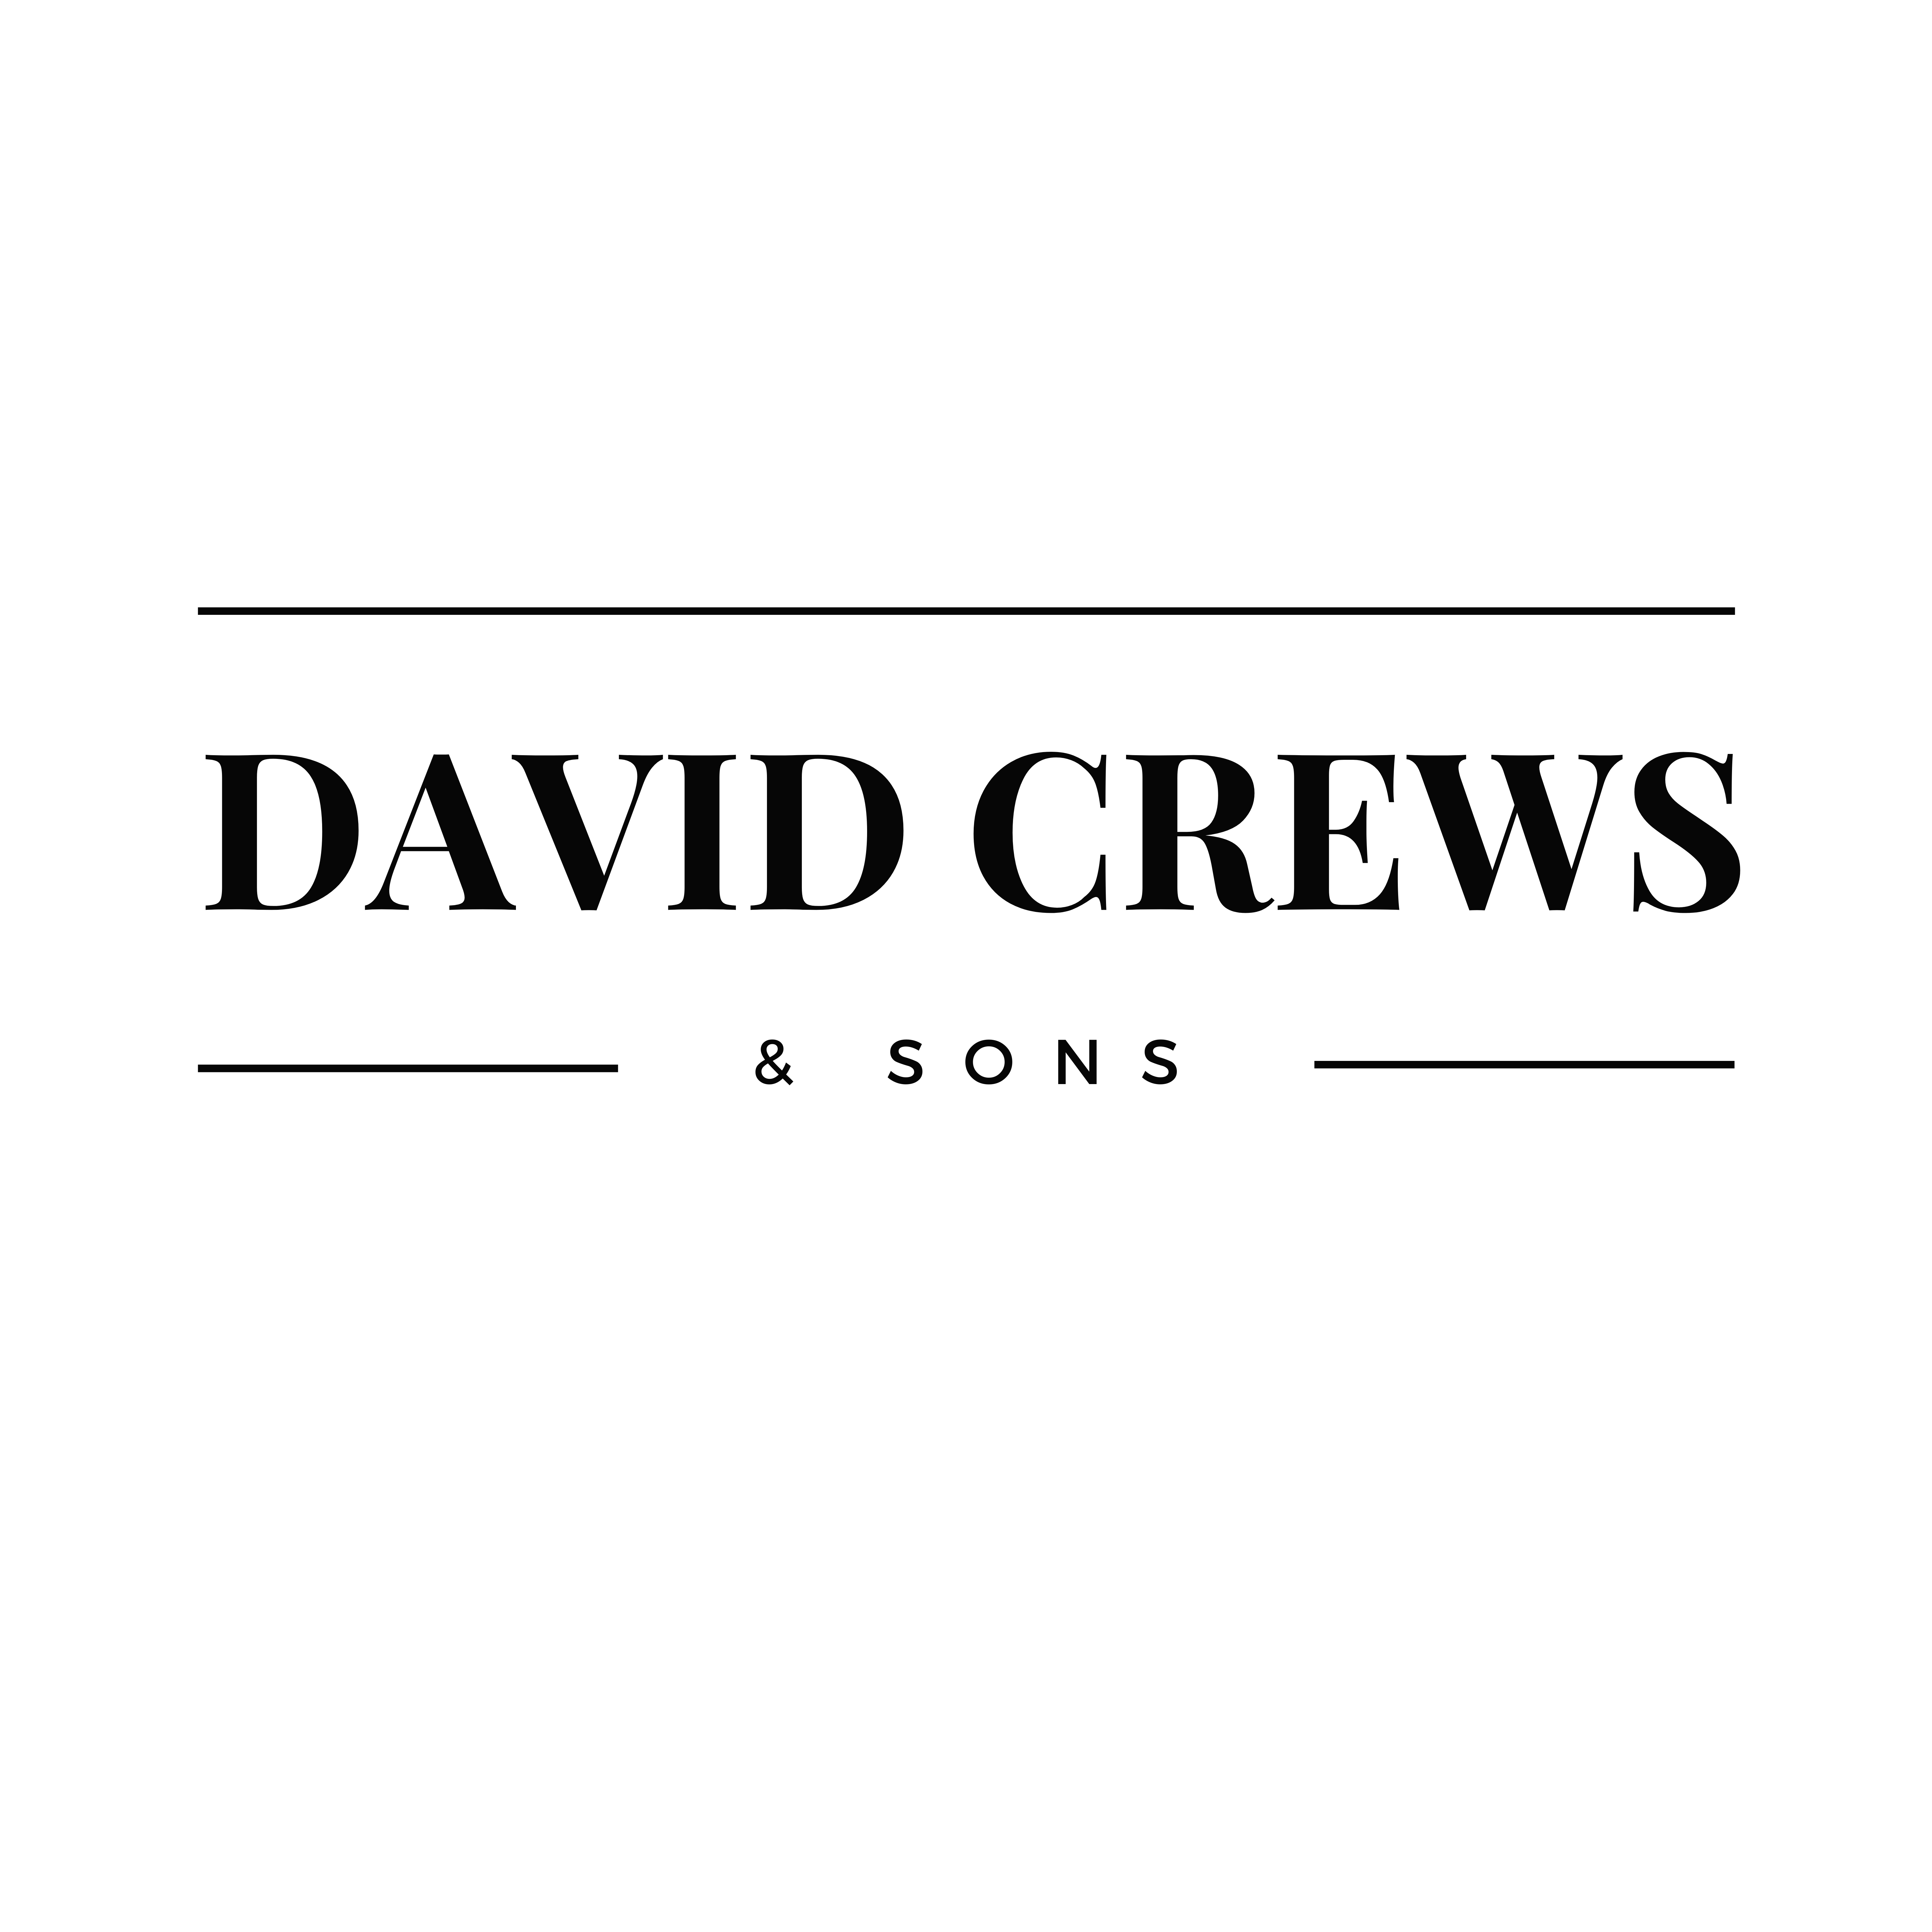 David Crews & Sons